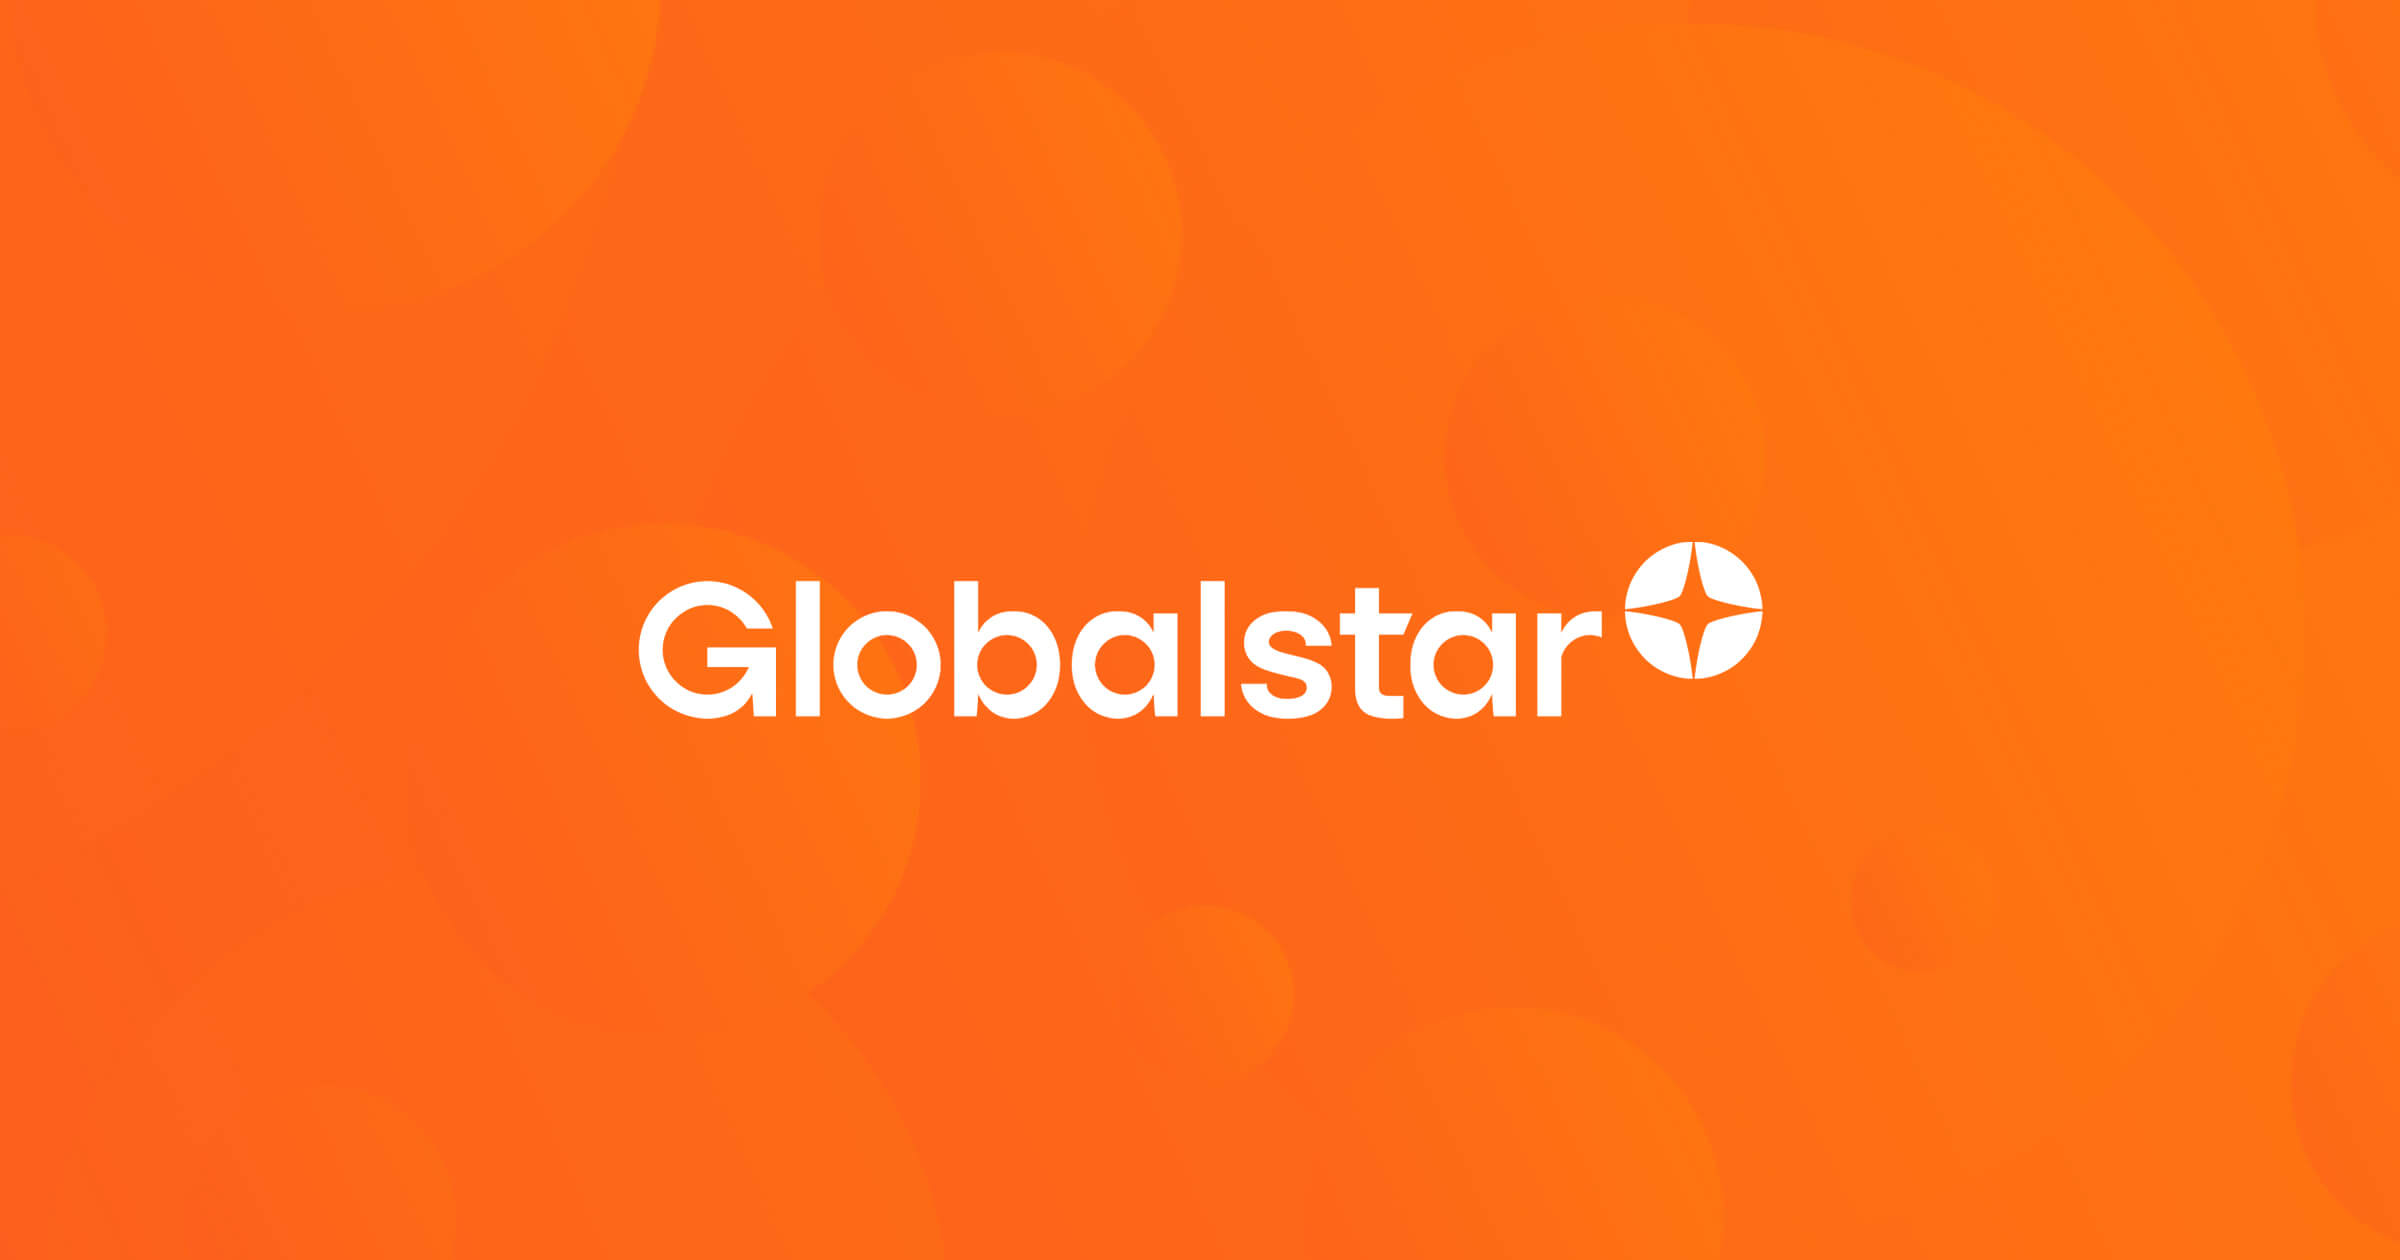 www.globalstar.com